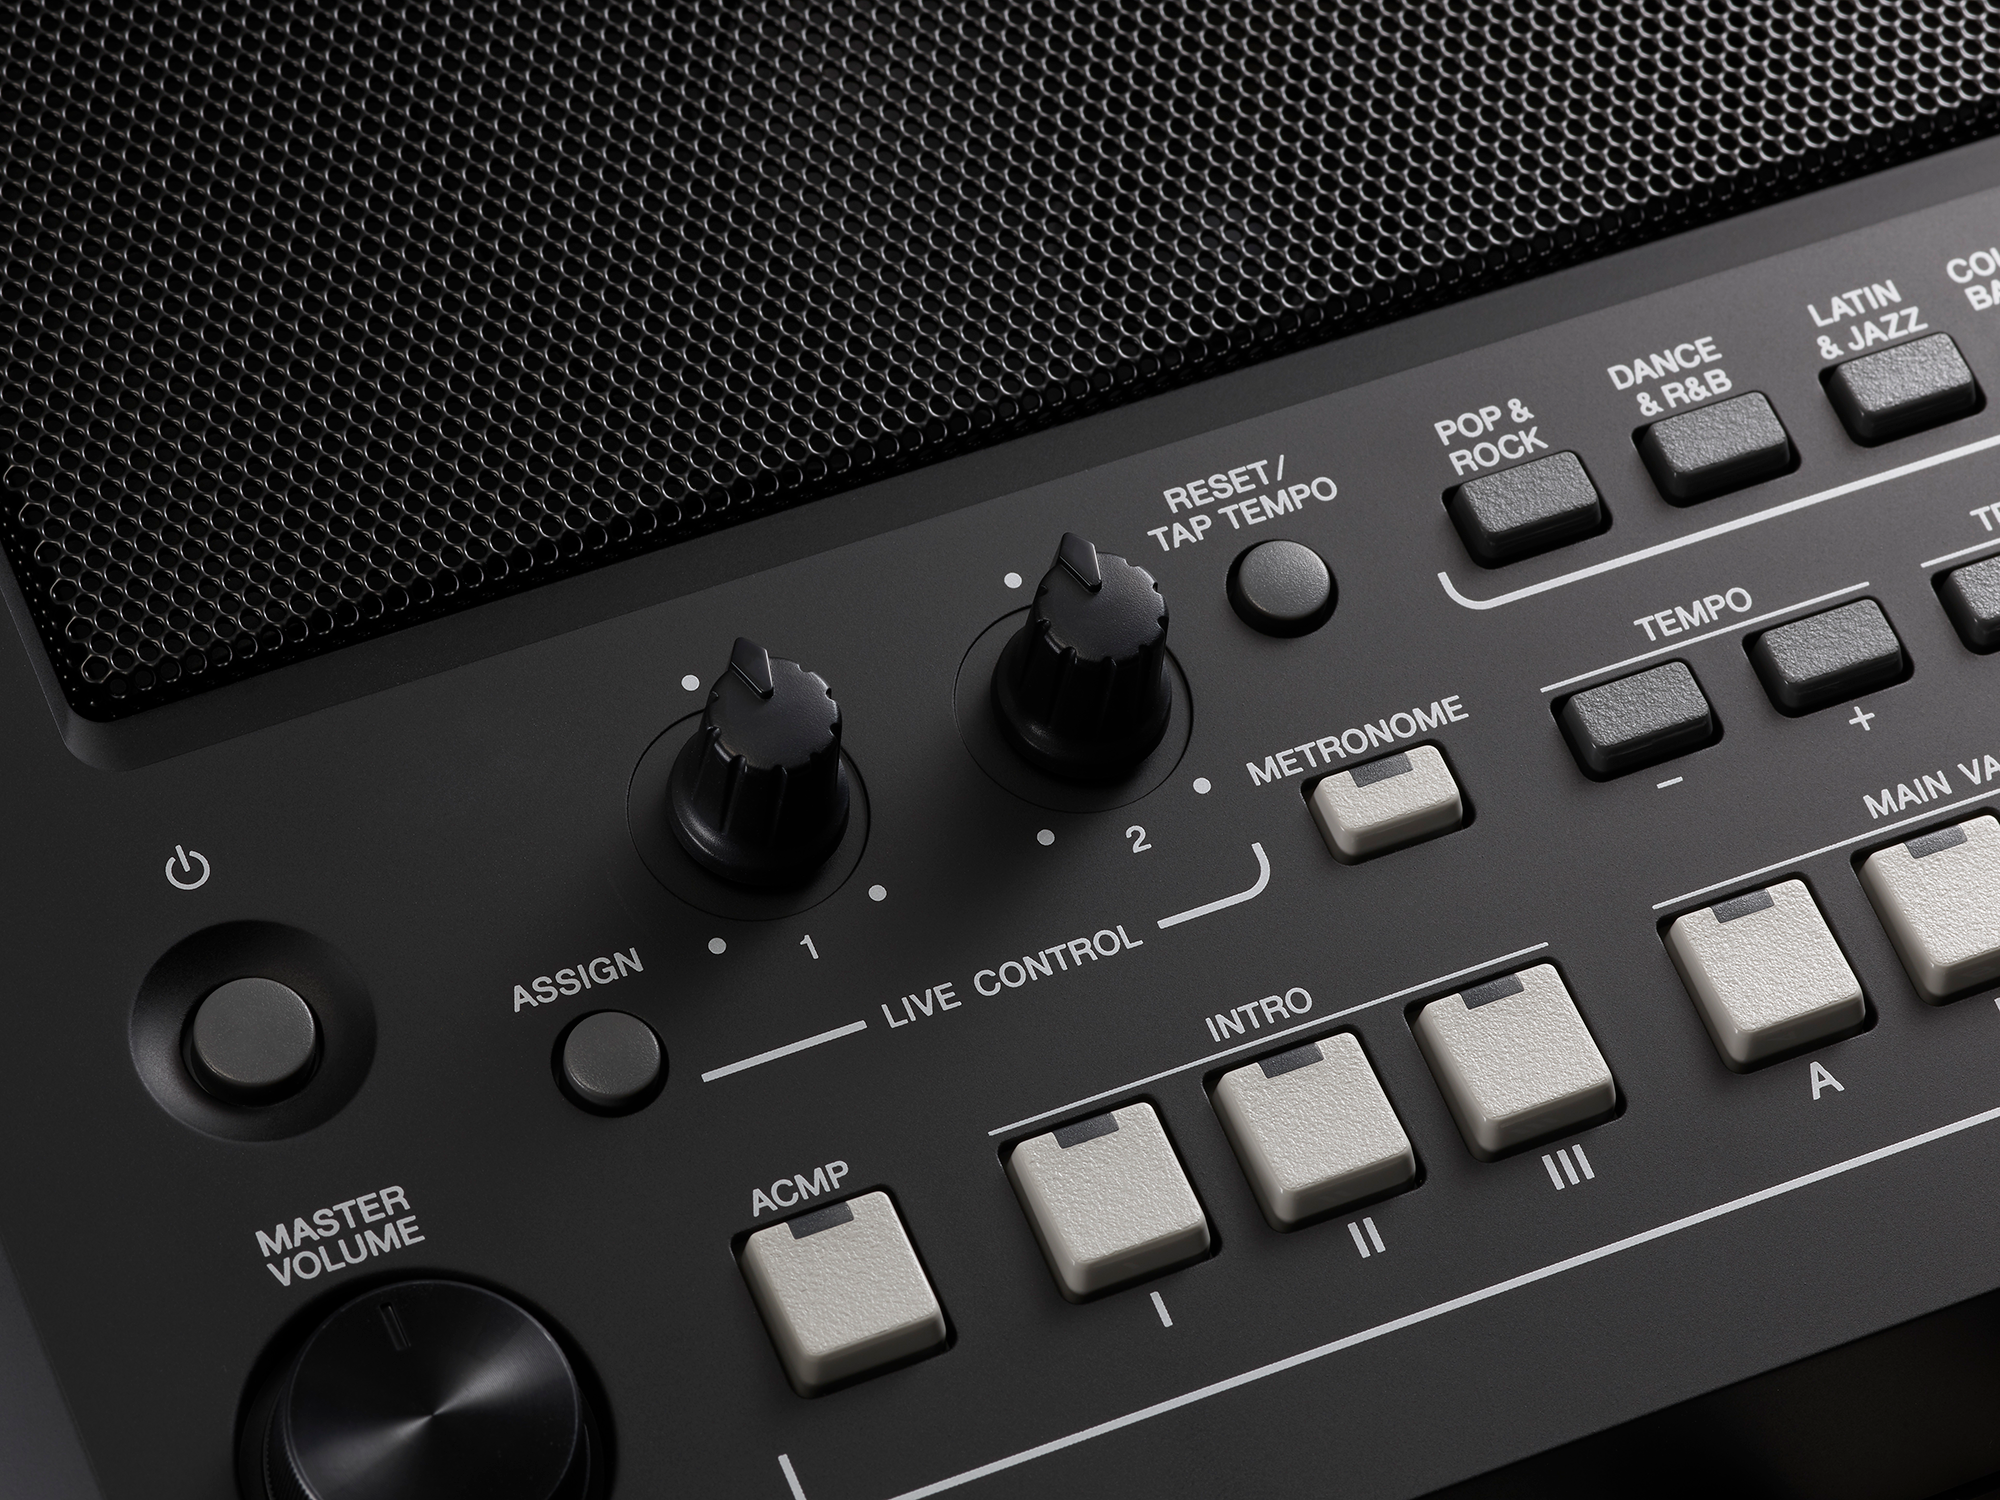 Teclado Yamaha PSR-SX600 Arranjador - Simili Música